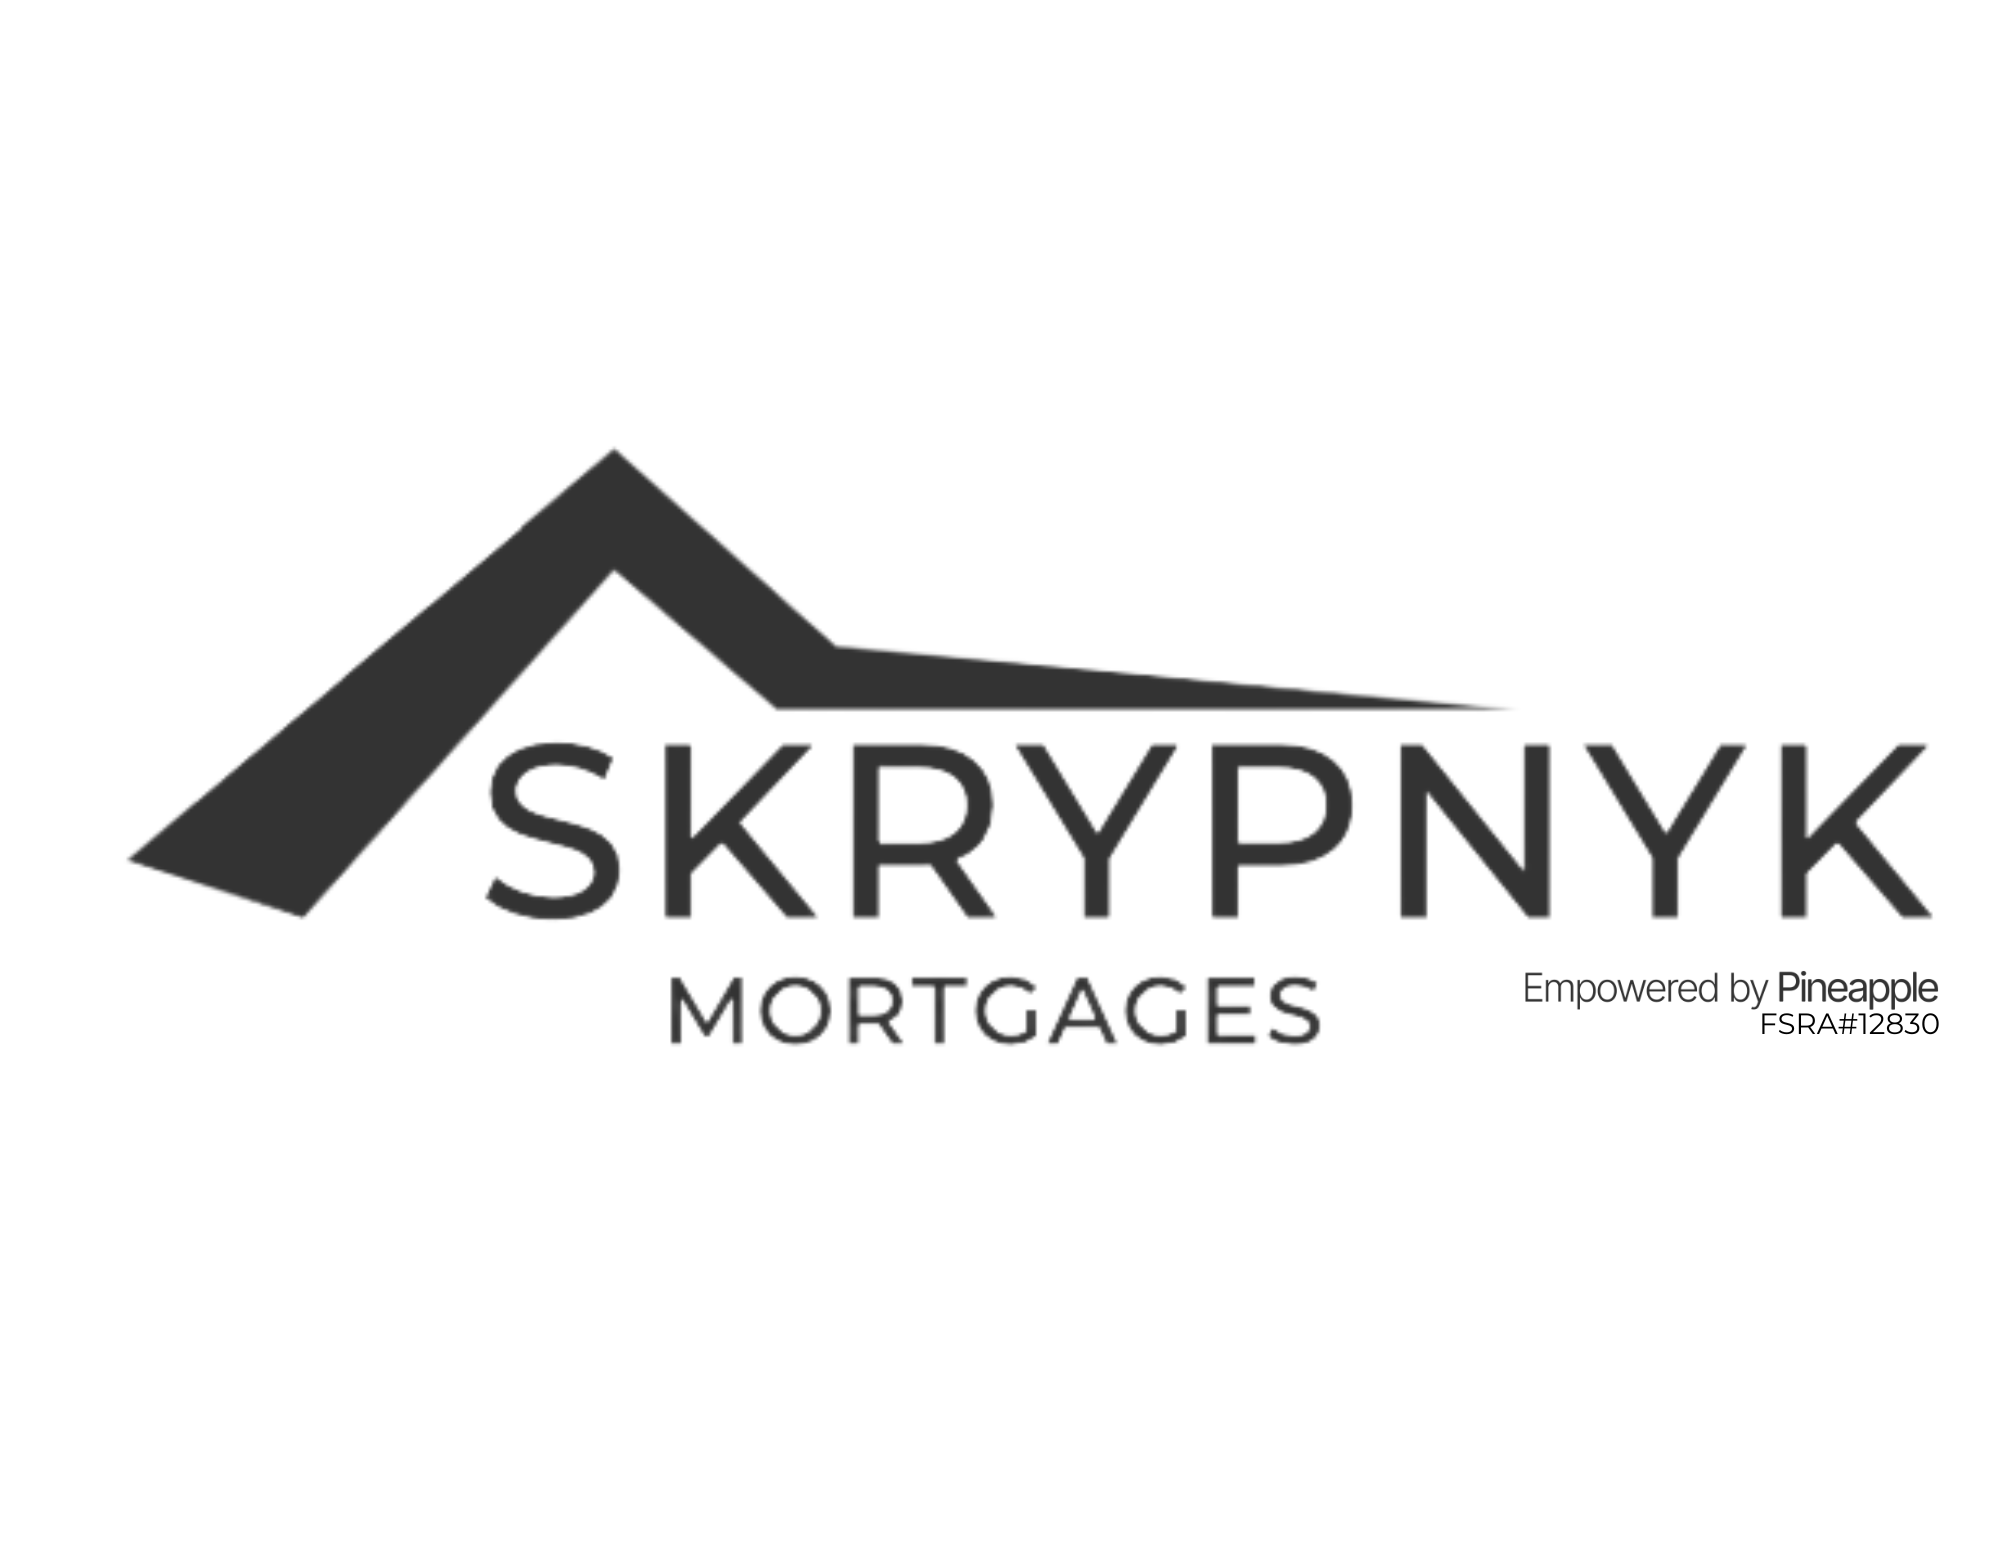 Skrypnyk Mortgages